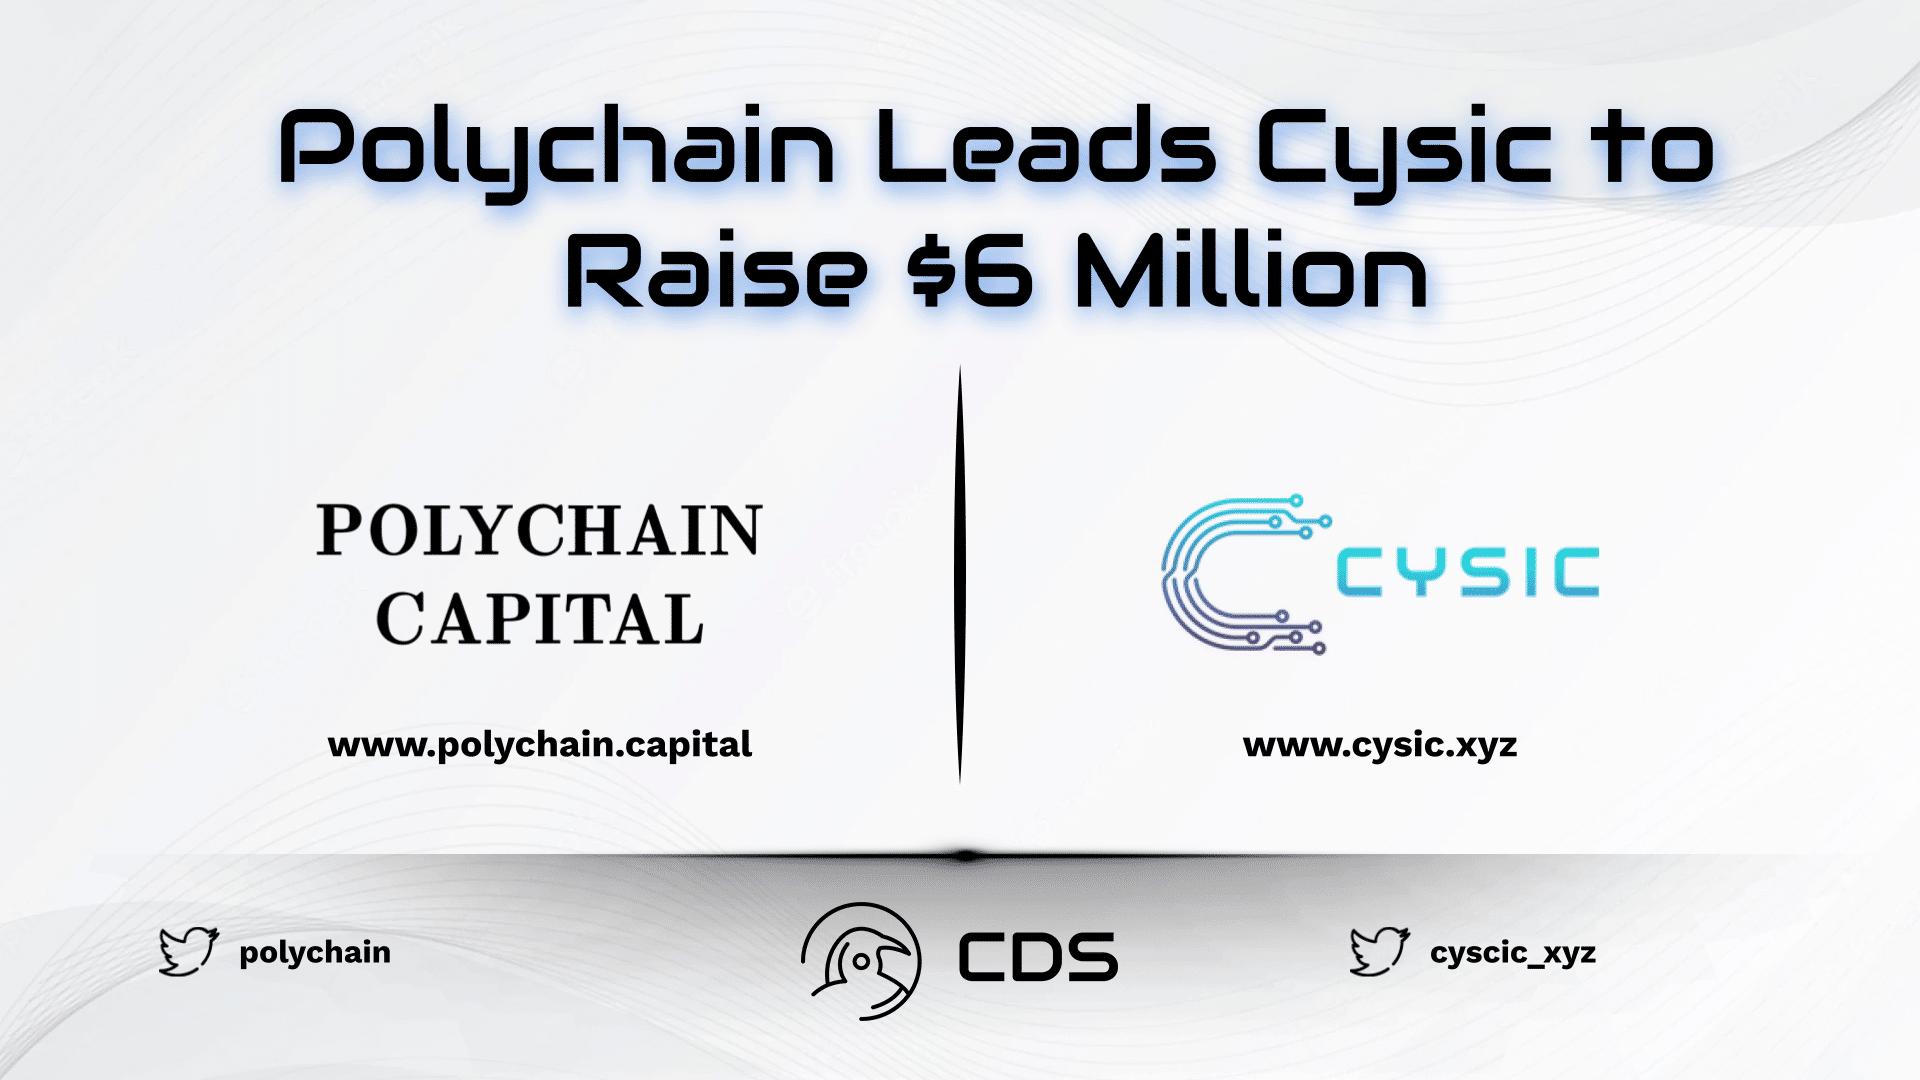 Polychain Leads Cysic to Raise $6 Million